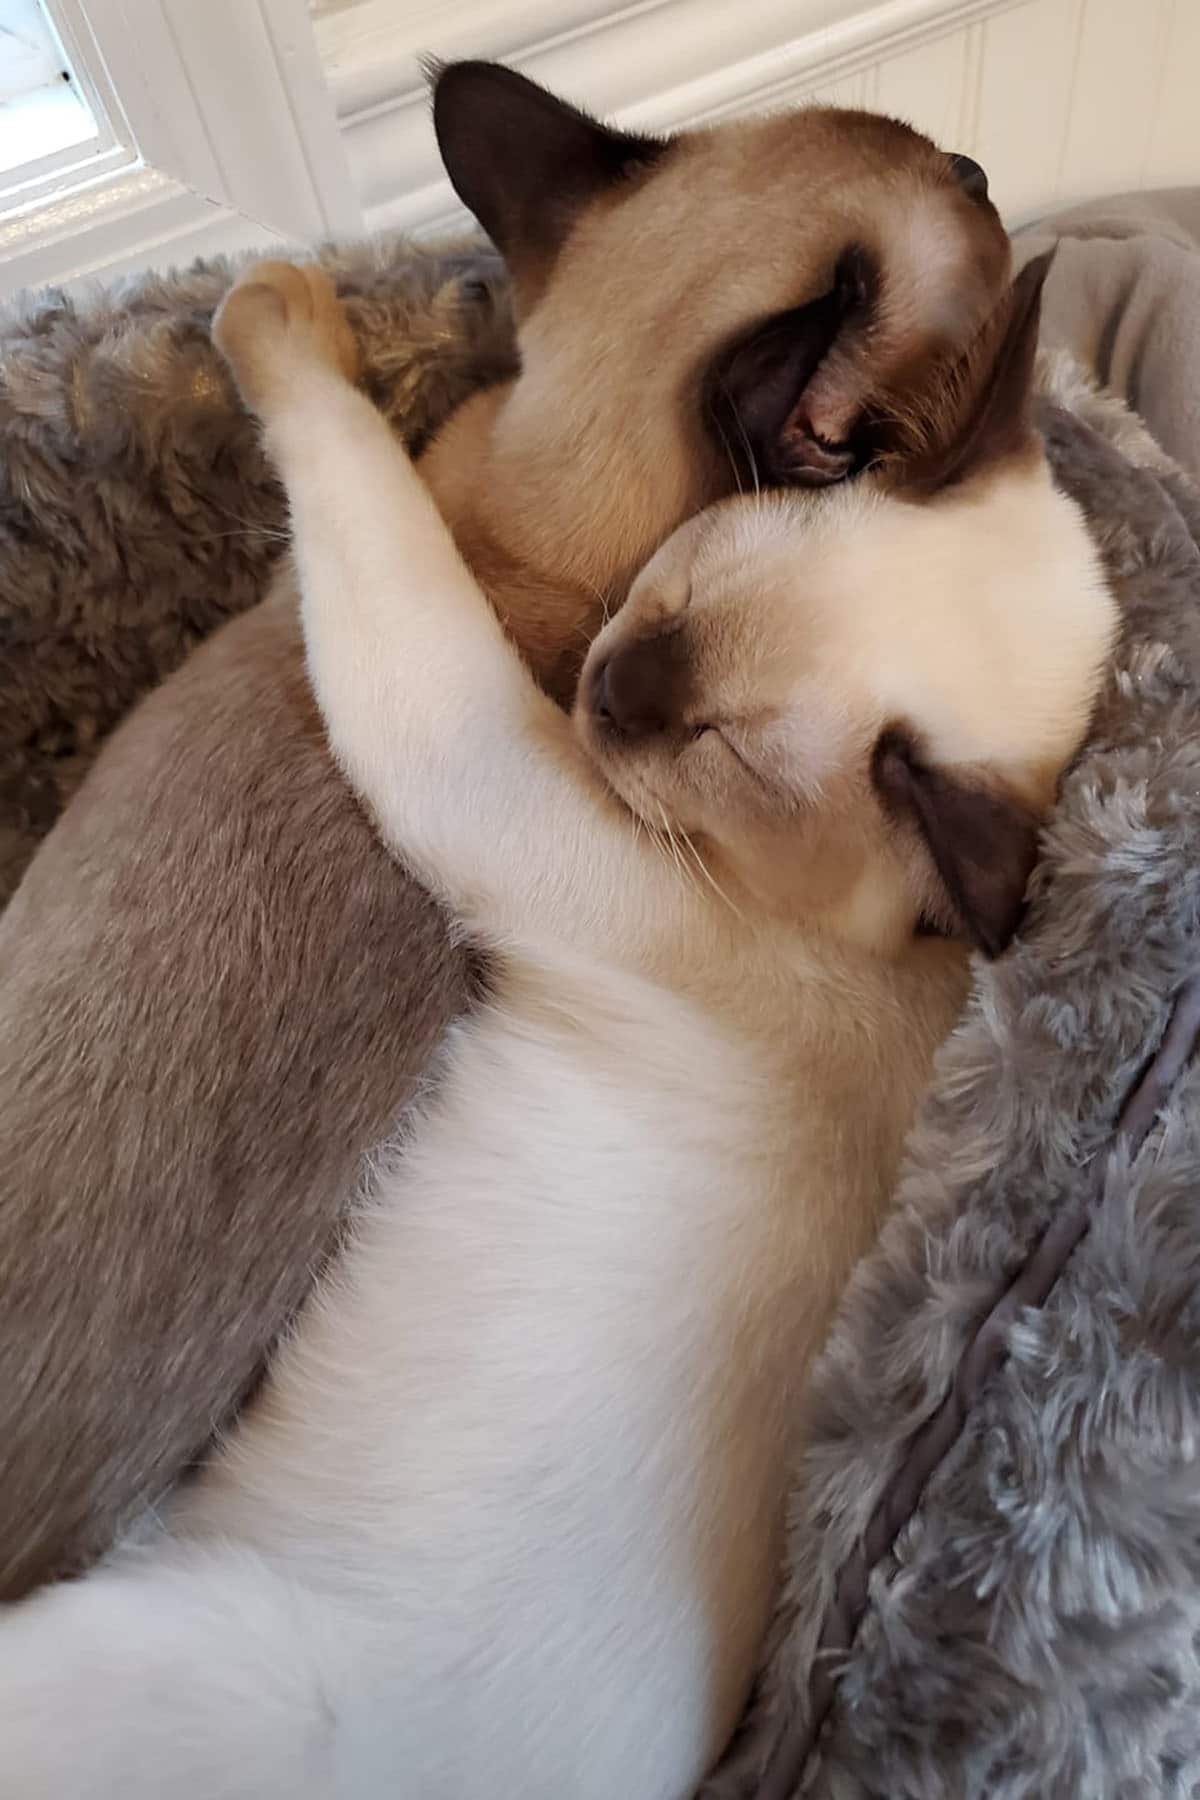 two sleeping kittens hugging